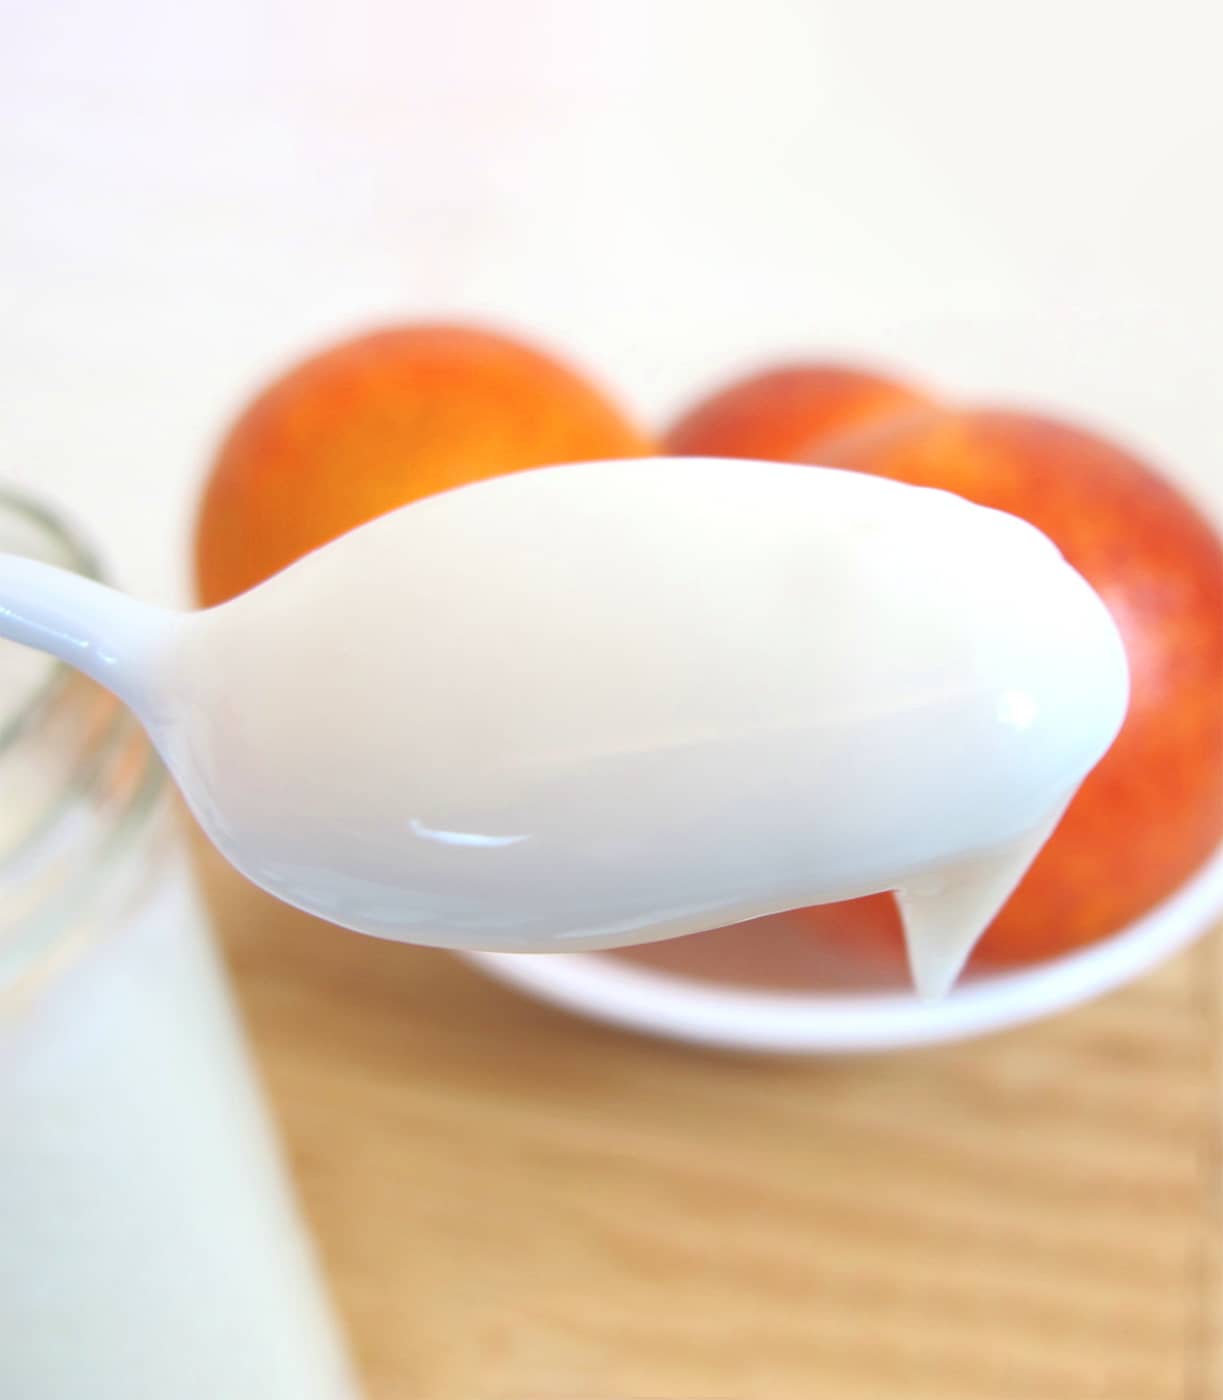 A spoonful of creamy yogurt